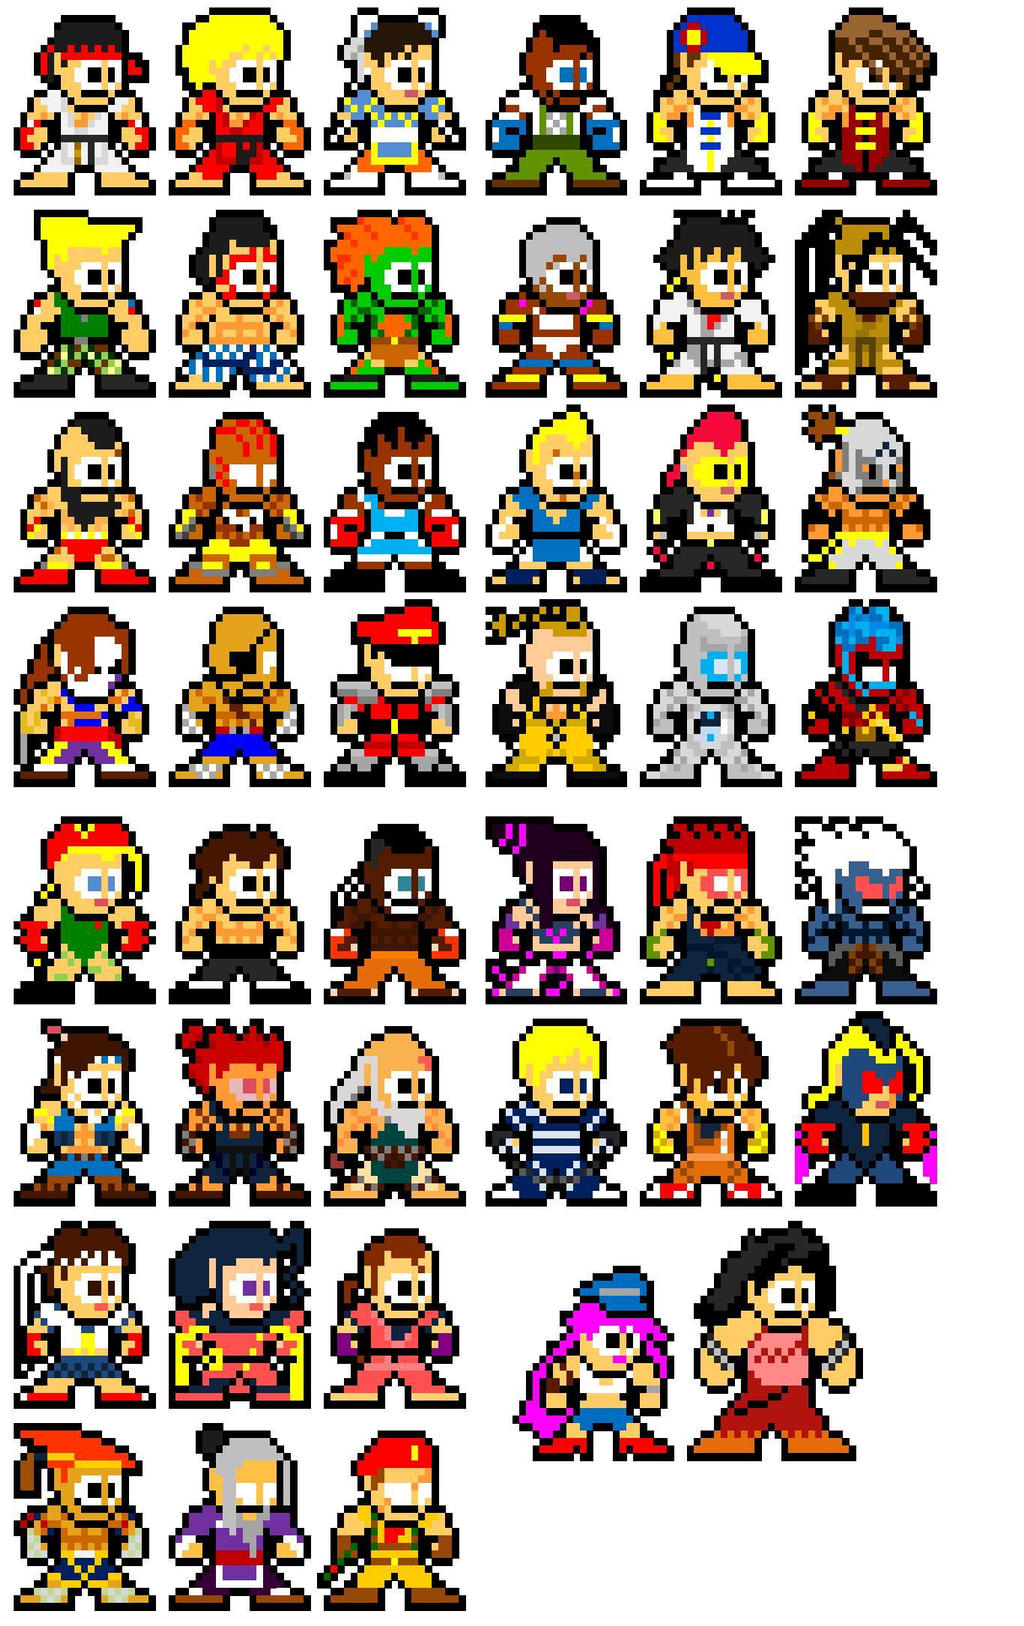 Super Street Fighter 4 Roster by Lunchbox5388 on DeviantArt